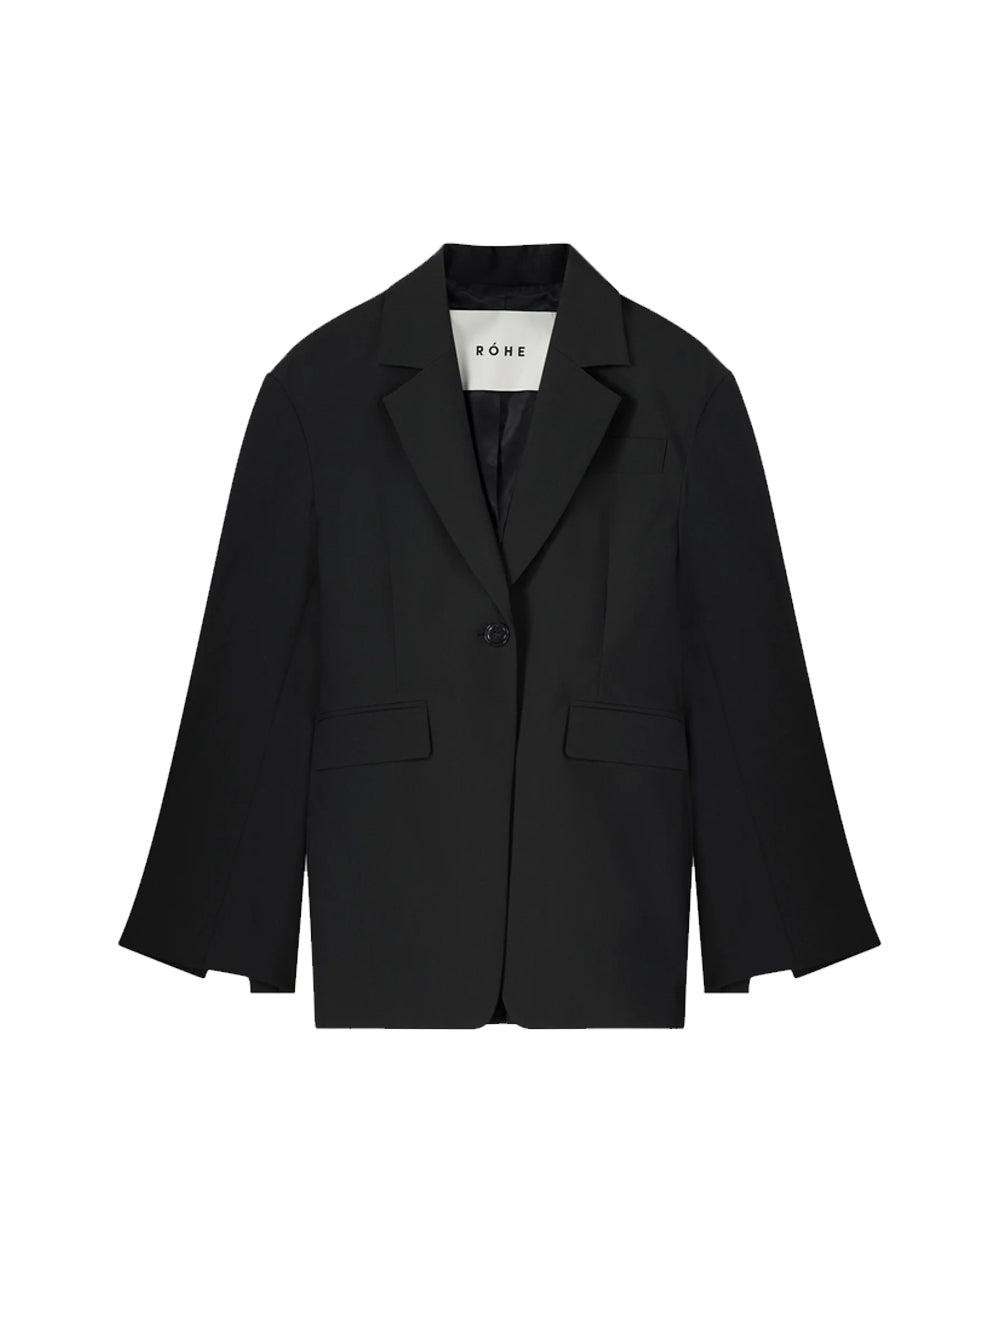 Rohe Wool Ati Structured Blazer in Black | Lyst